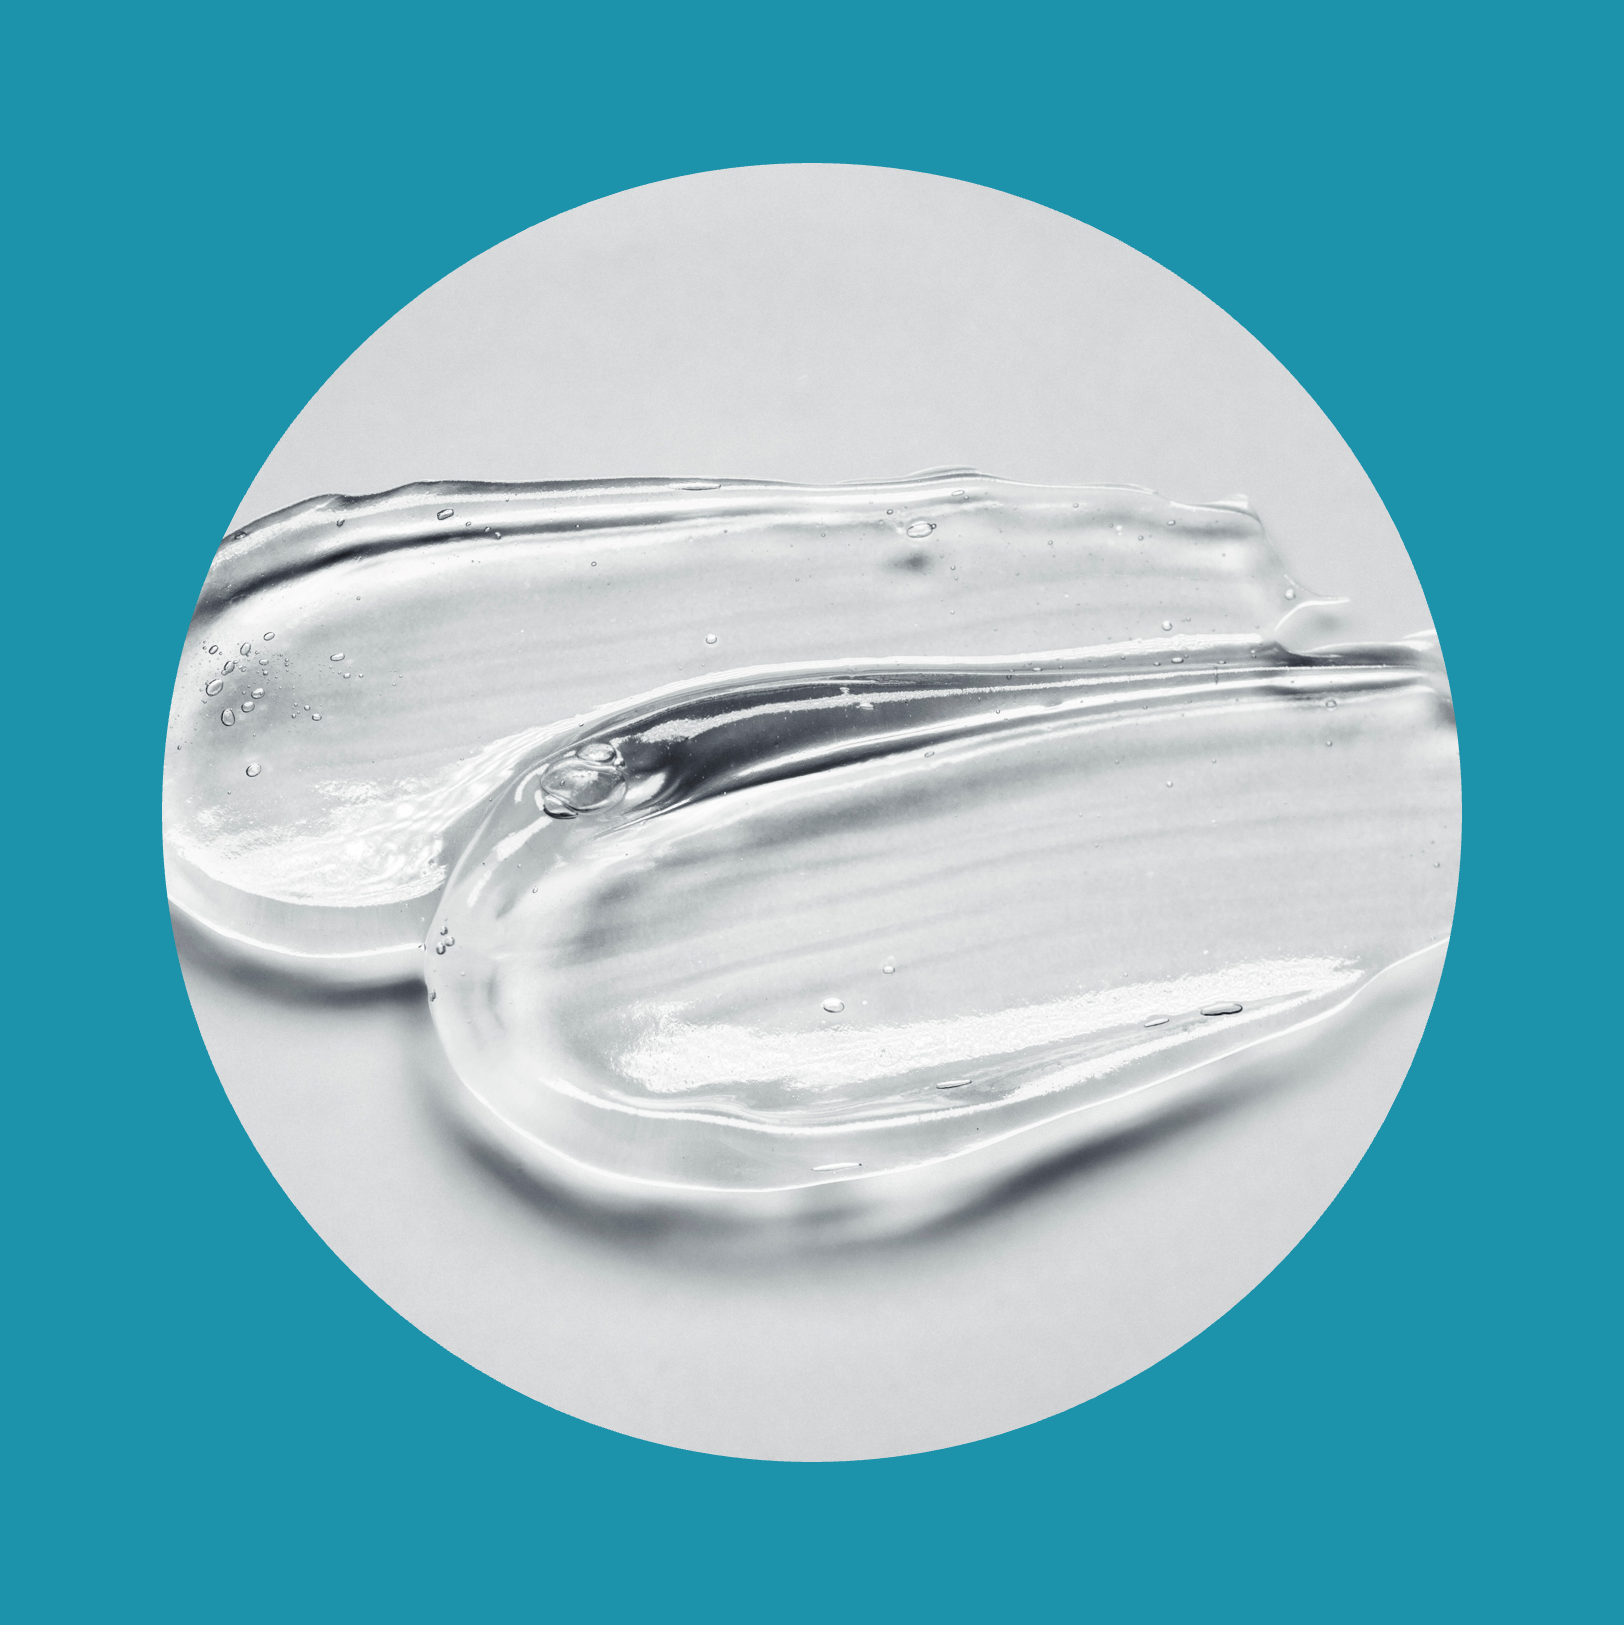 Liquid gray gel cosmetic texture smudge collagen or hyaluronic acid